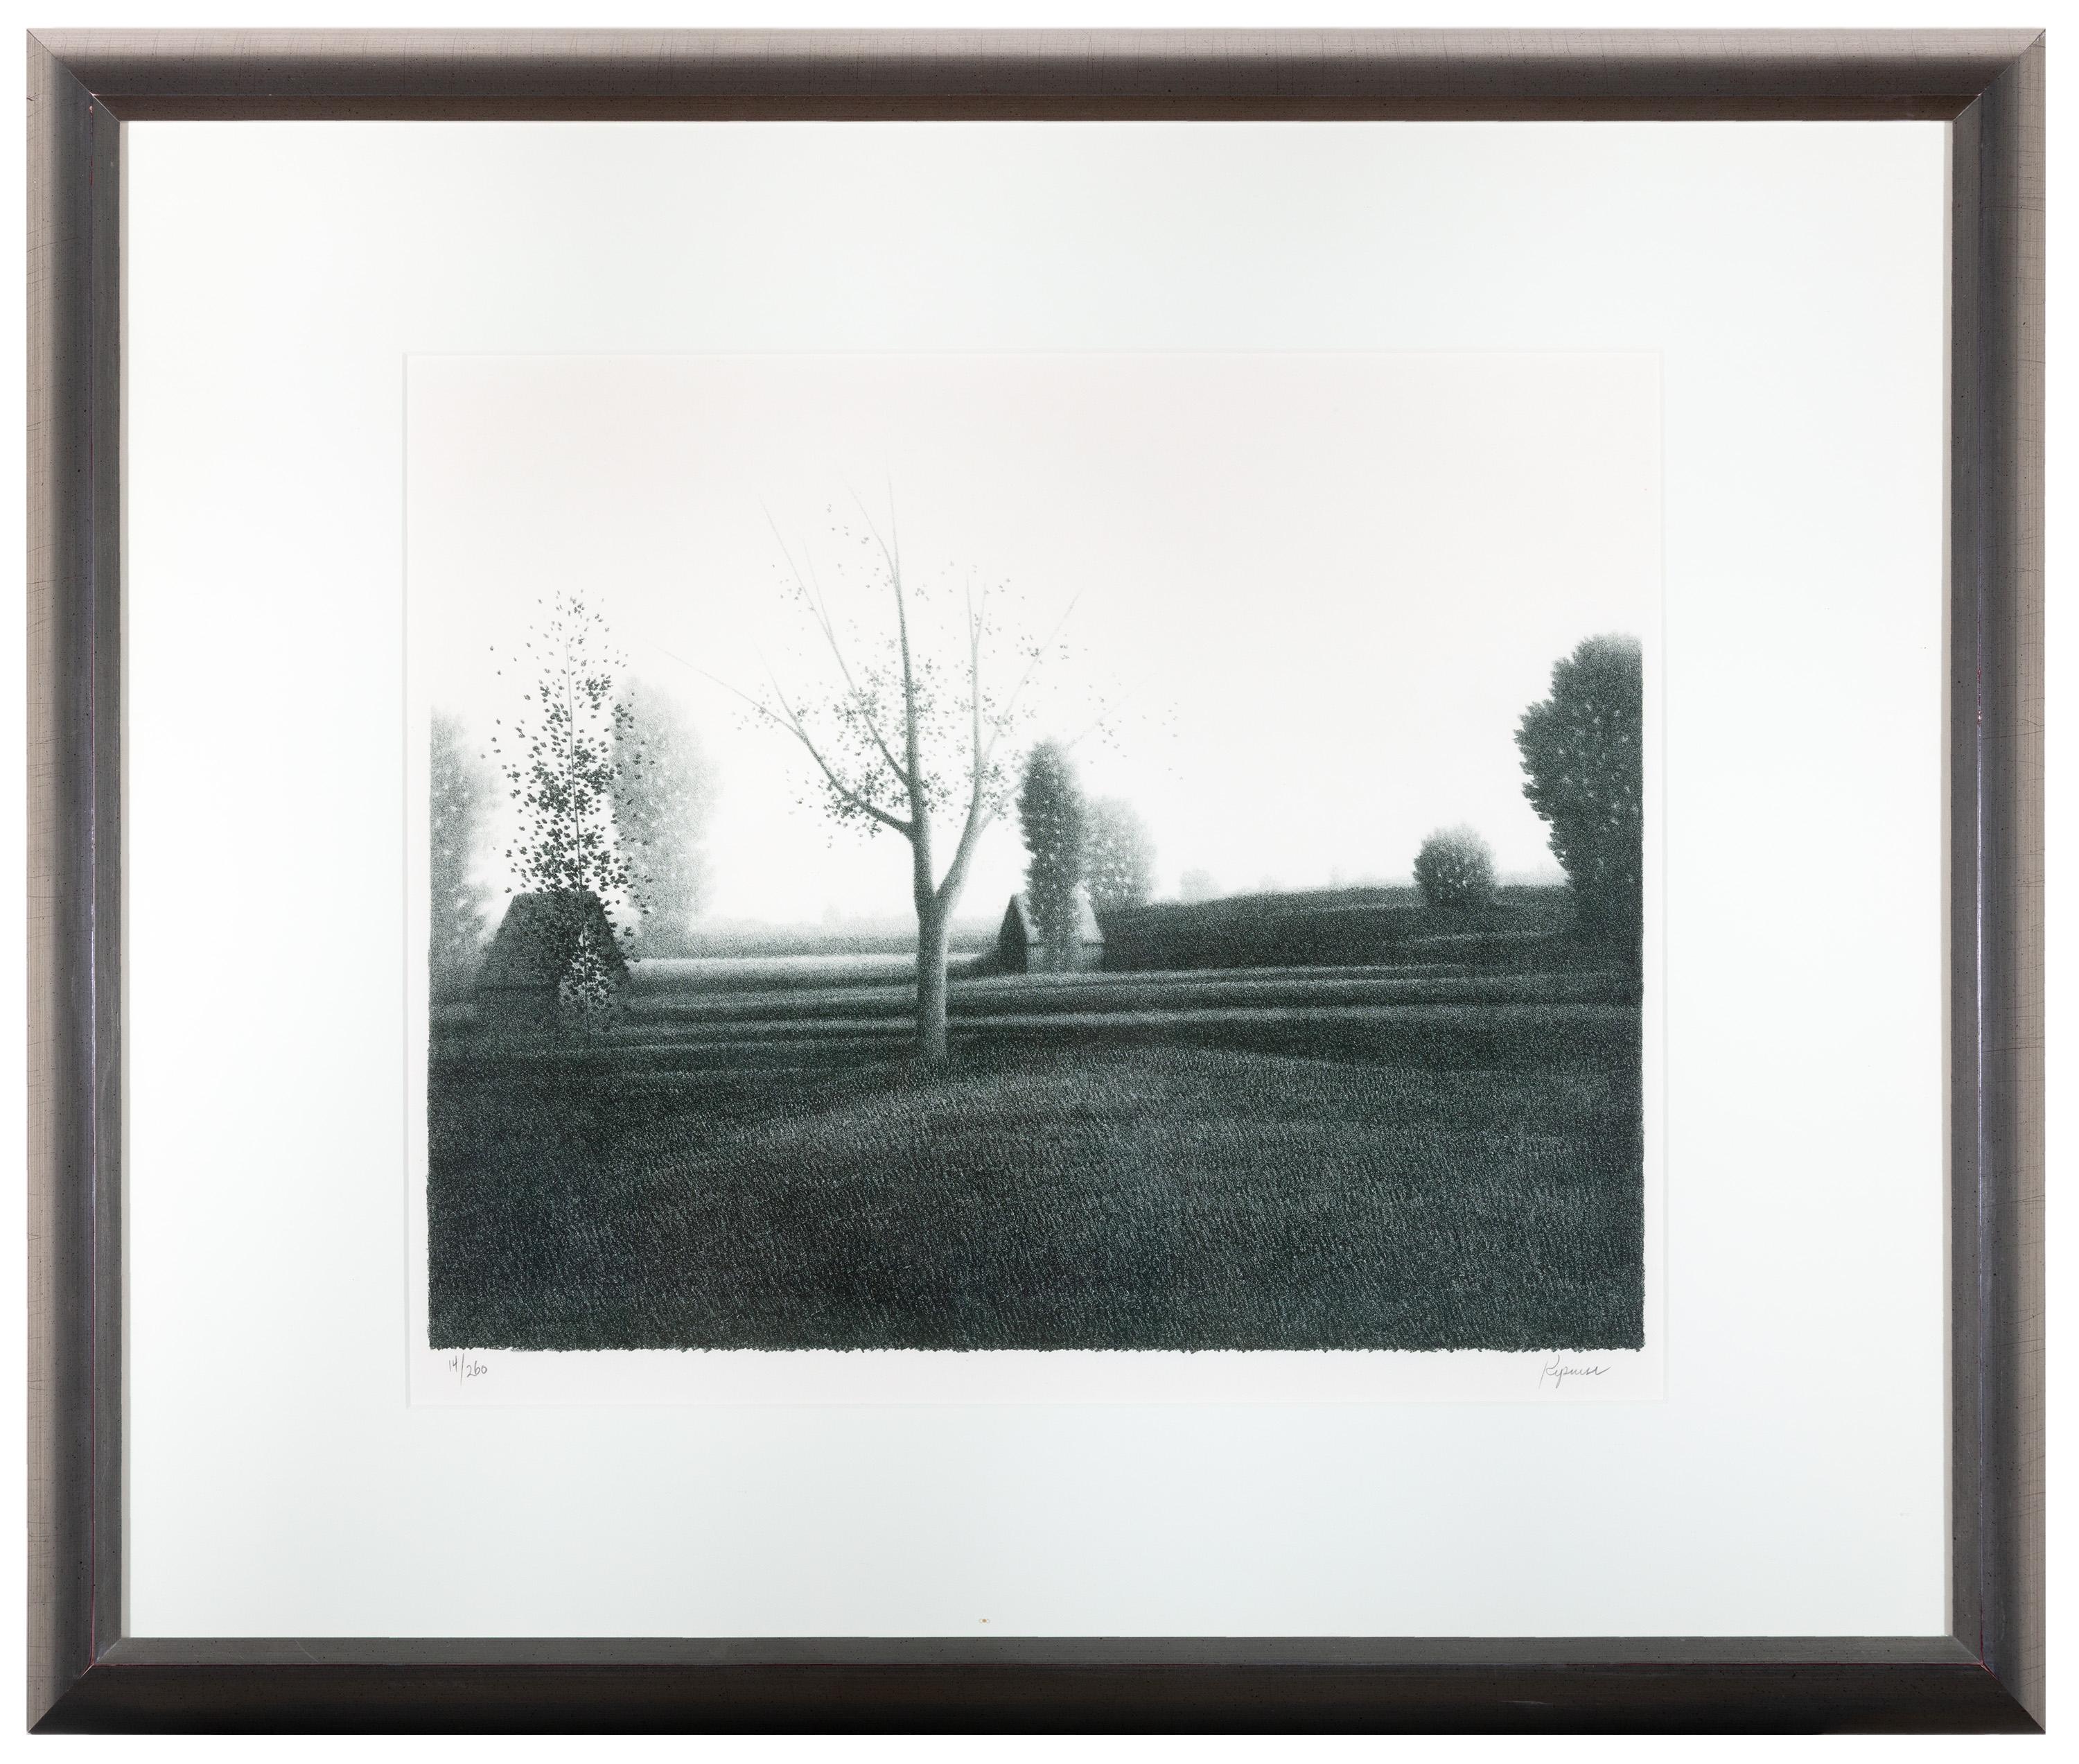 Robert Kipniss Landscape Print - "Landscape" Lithograph, Signed 